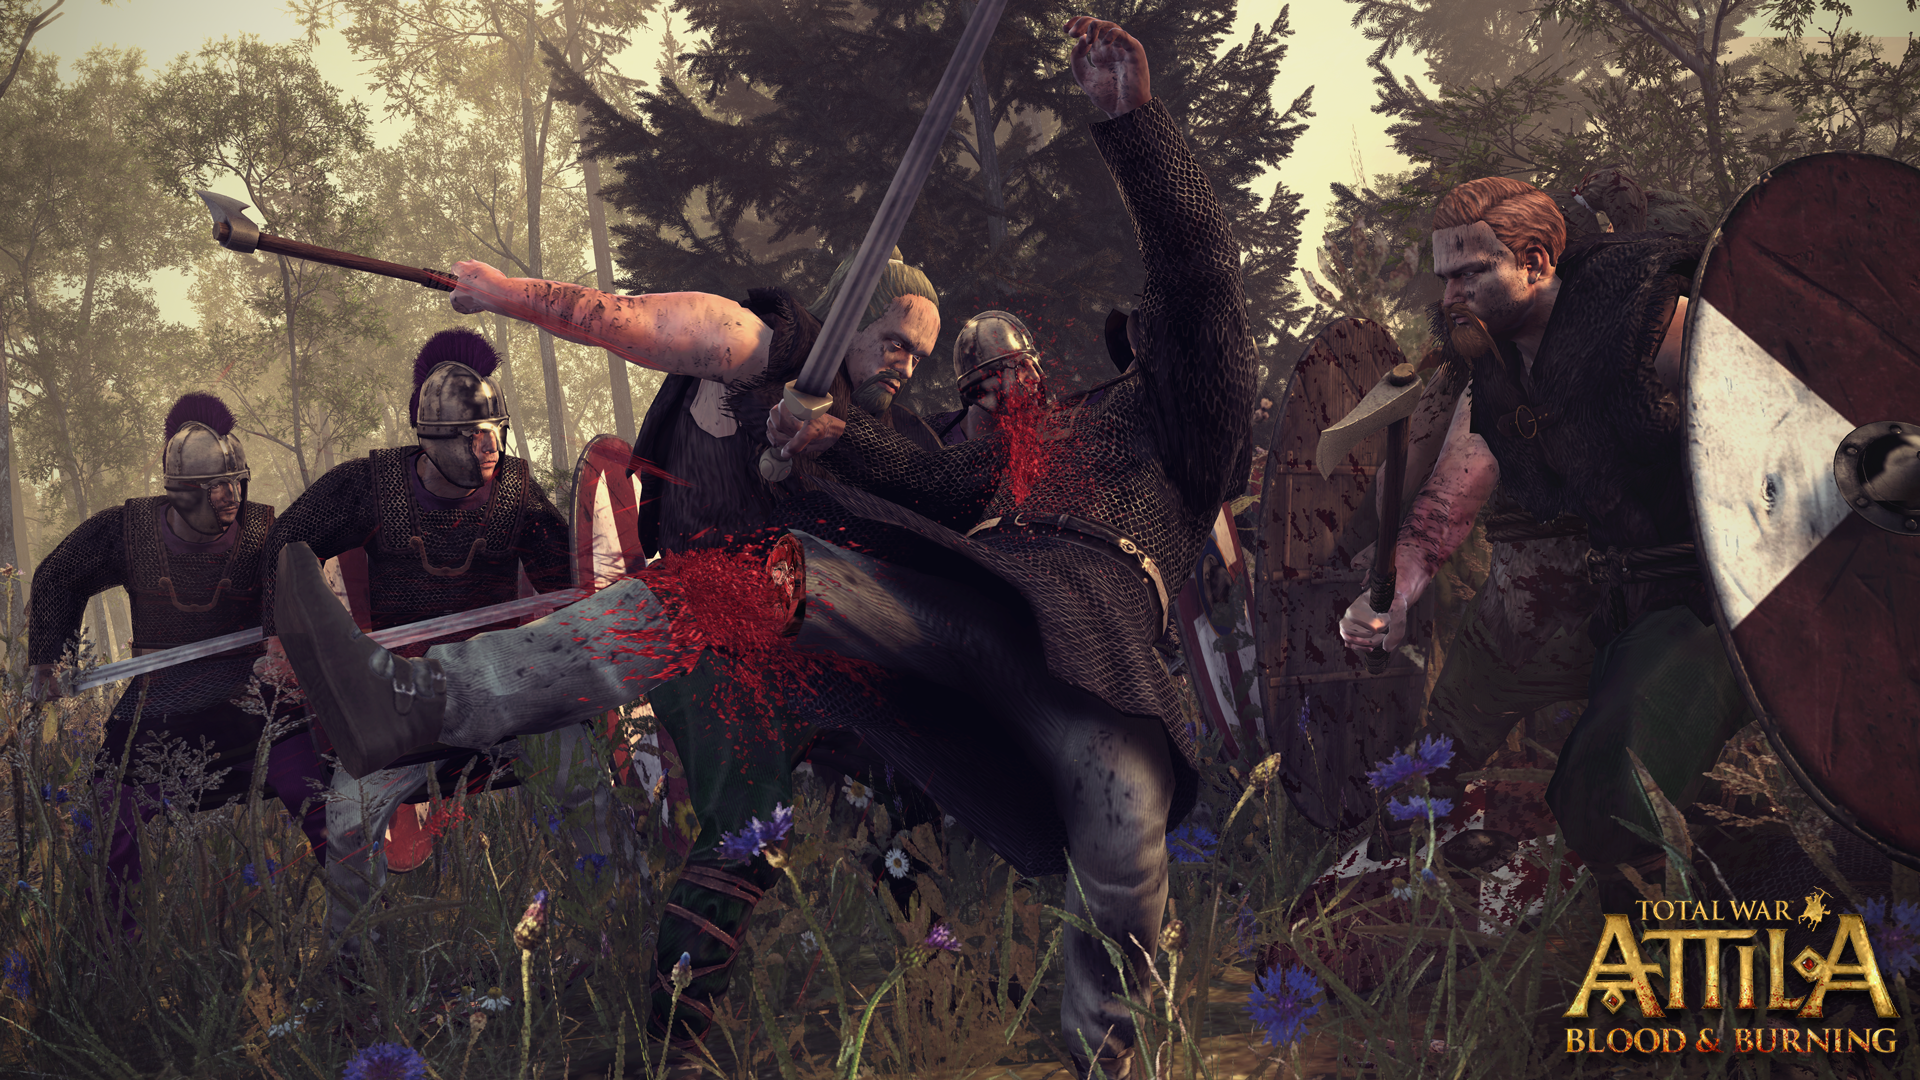 Total War Attilas Blood & Burning DLC brings violence and vomit